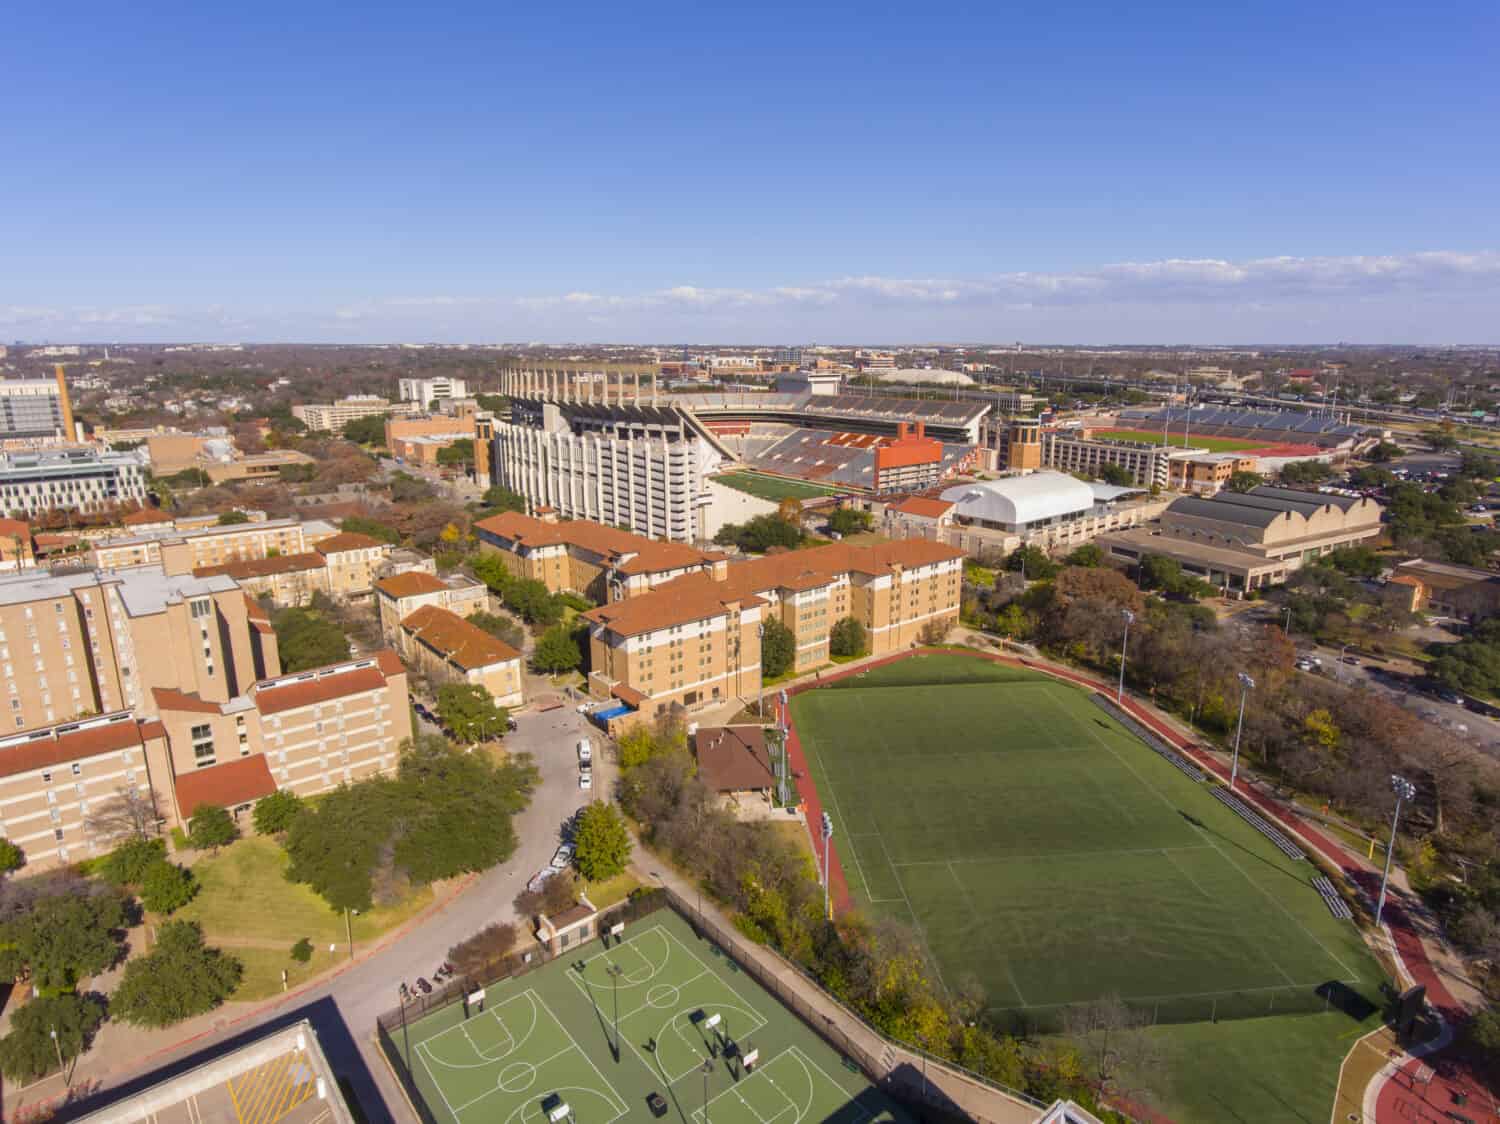 University of Texas at Austin aerial view including Darrell K Royal-Texas Memorial Stadium, Austin, Texas, USA.